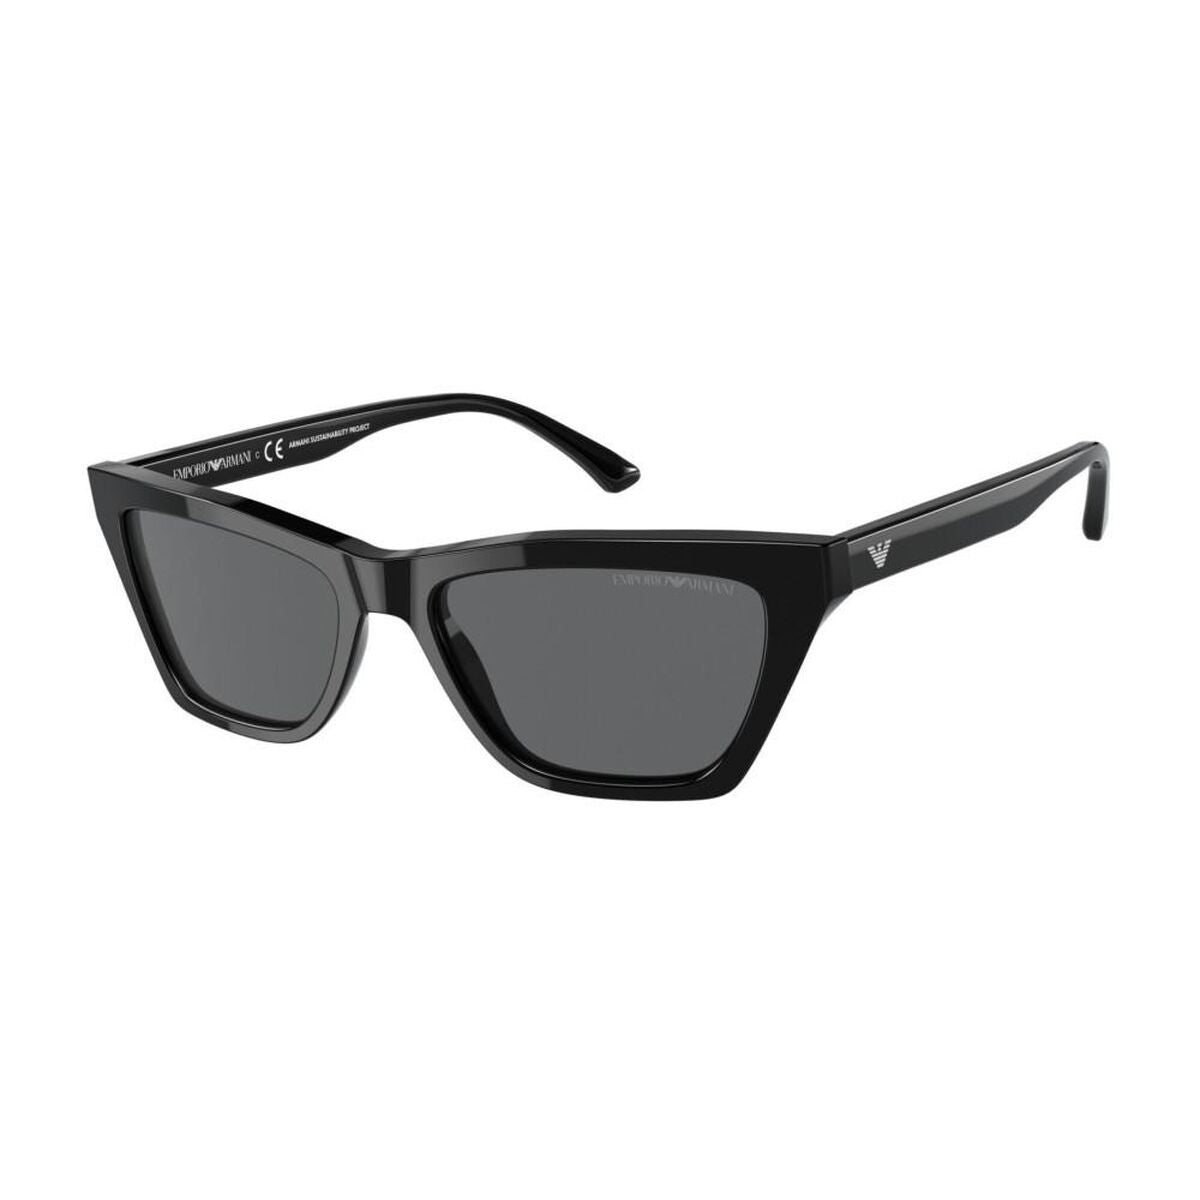 Kaufe Damensonnenbrille Armani EA 4169 bei AWK Flagship um € 167.00